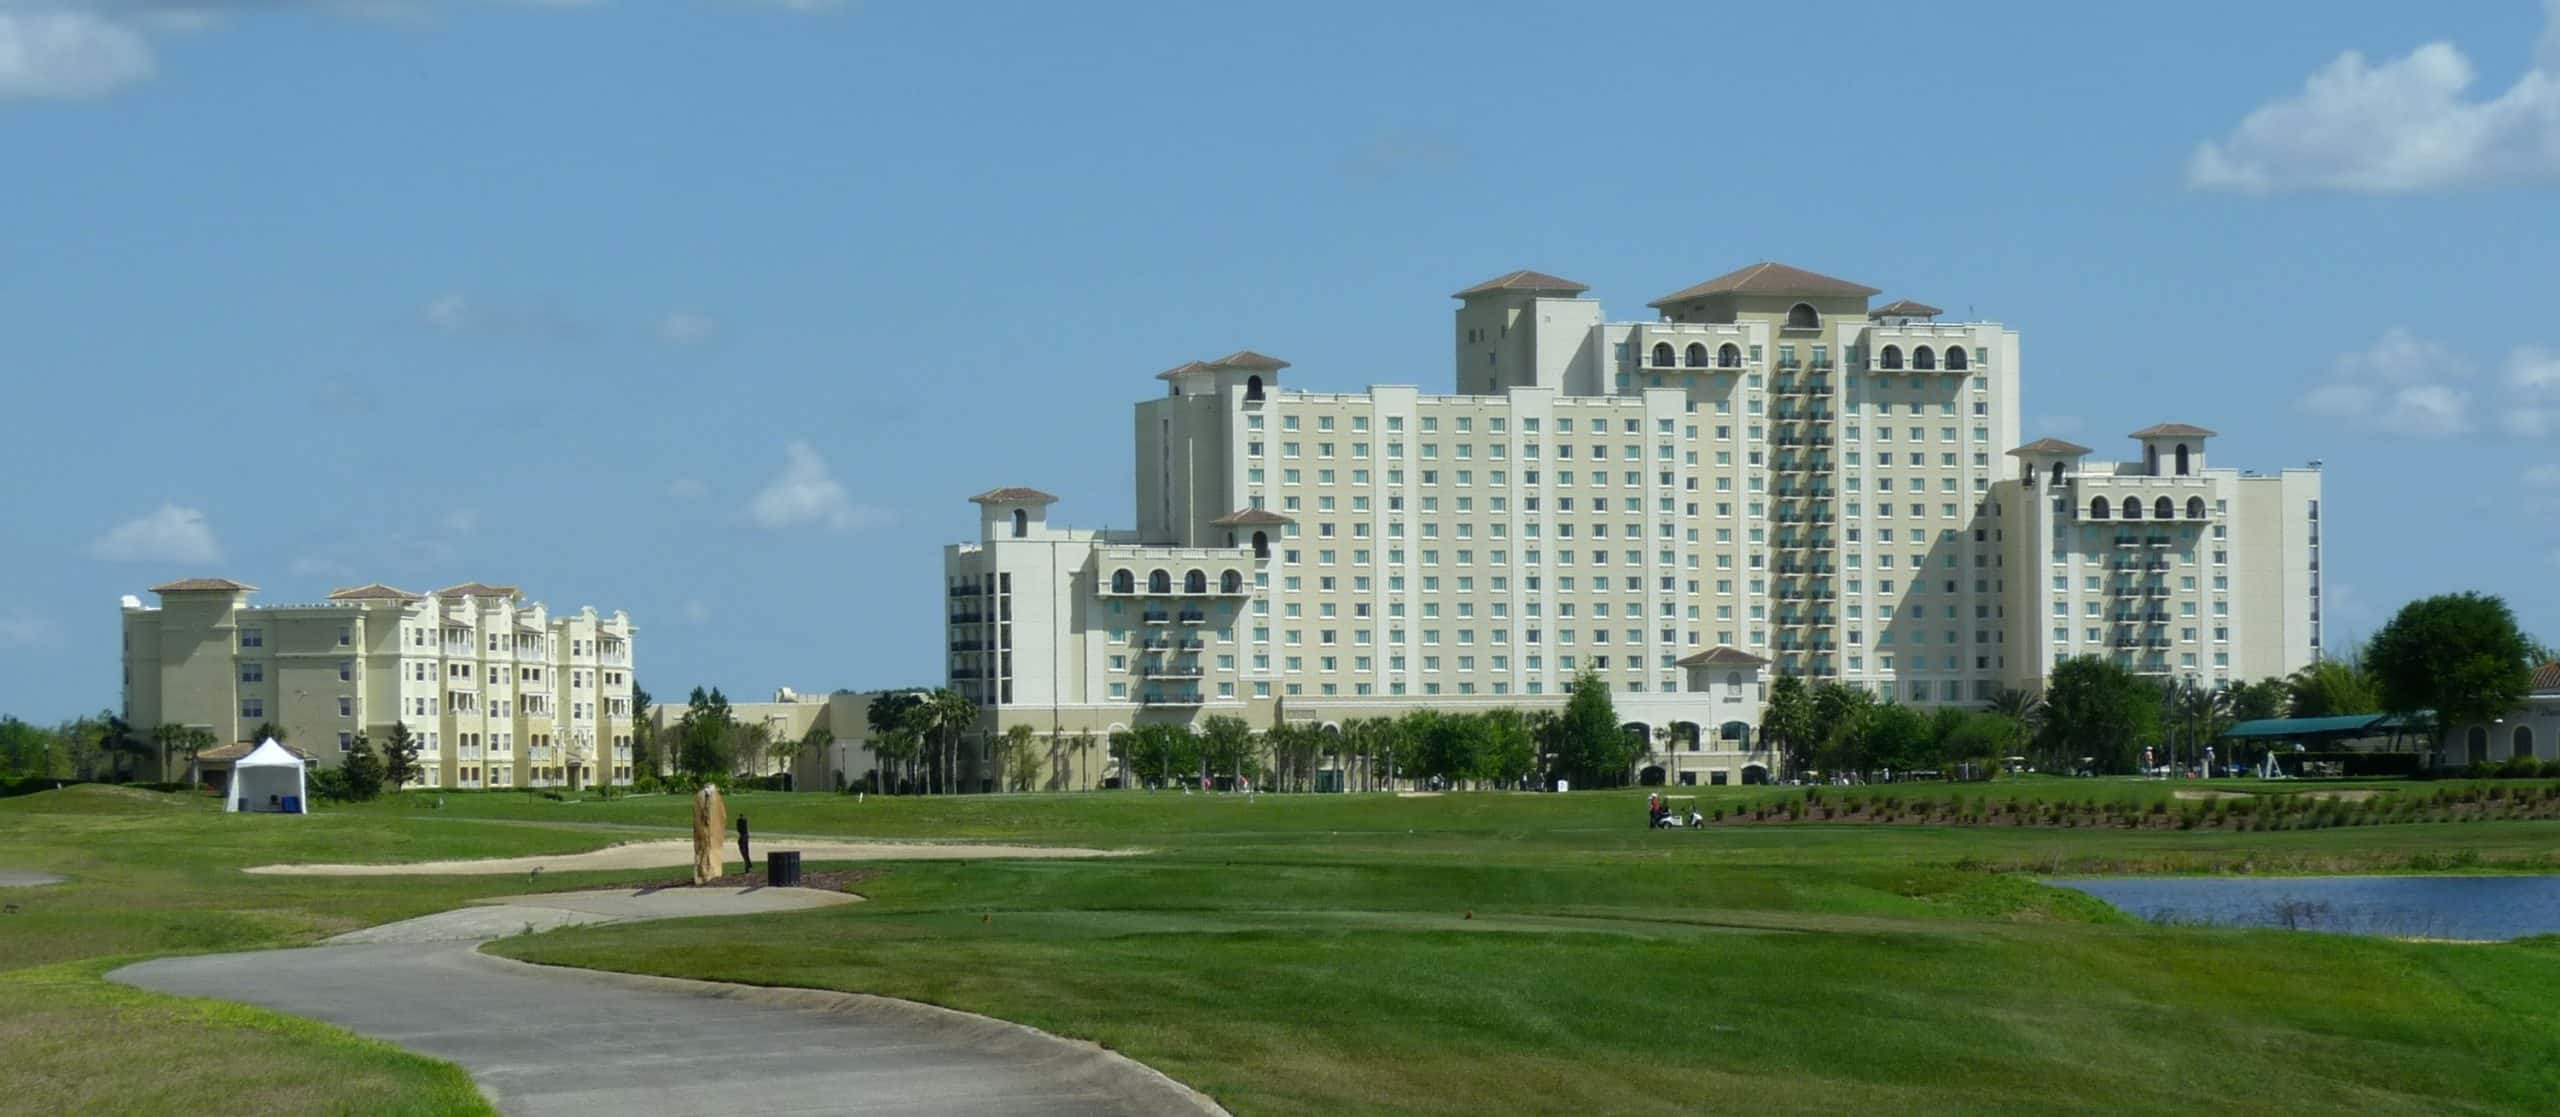 Omni Orlando Resort Convention Center